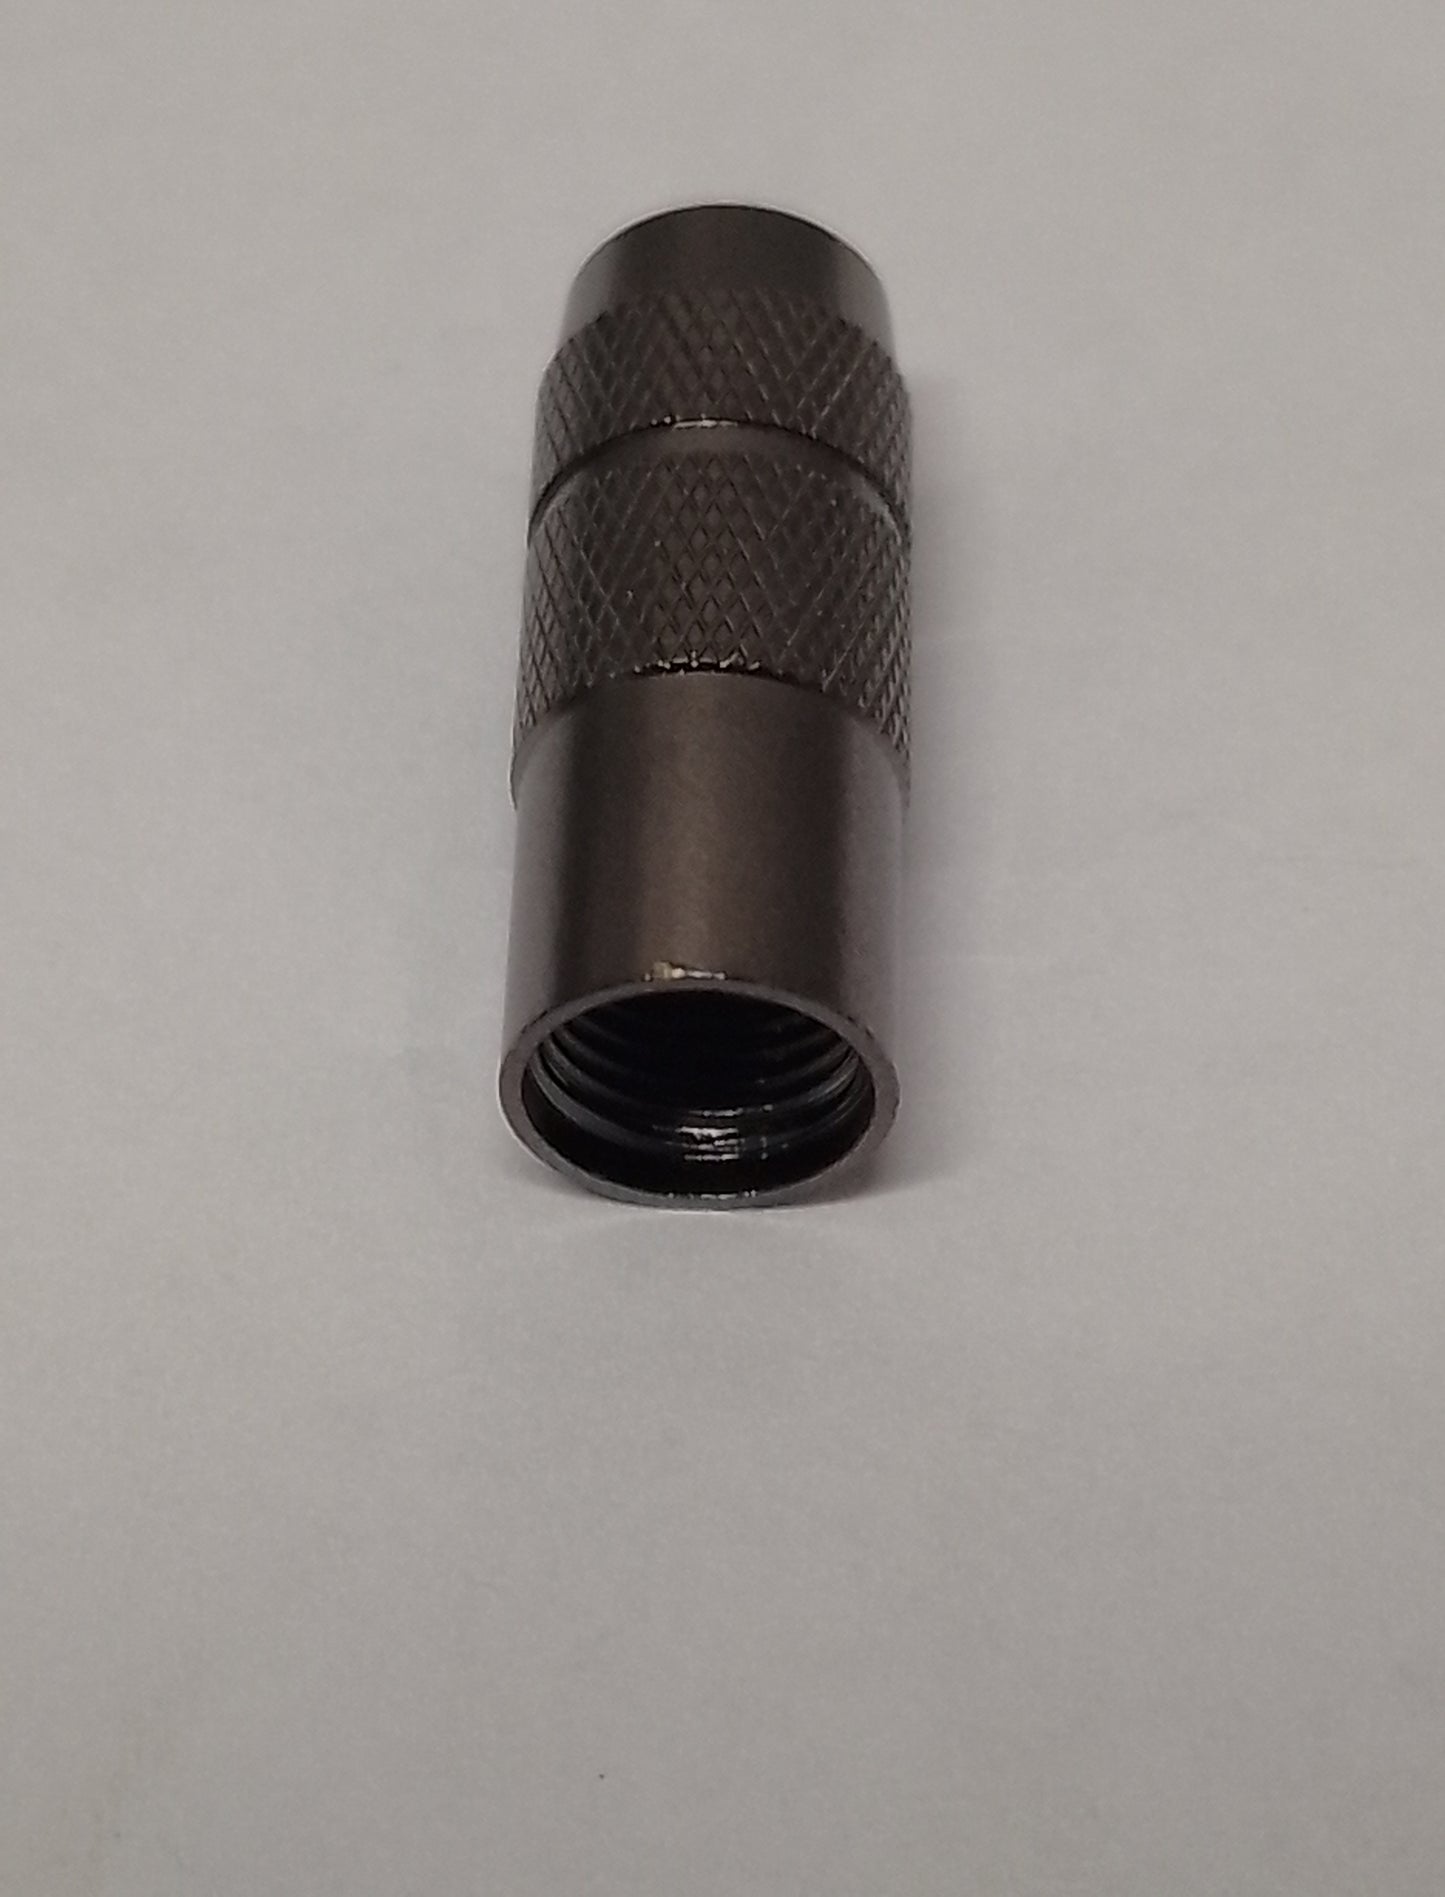 2.5mmプラグ SENNHEISER MOMENTUM用 ブラック ケーブル 自作